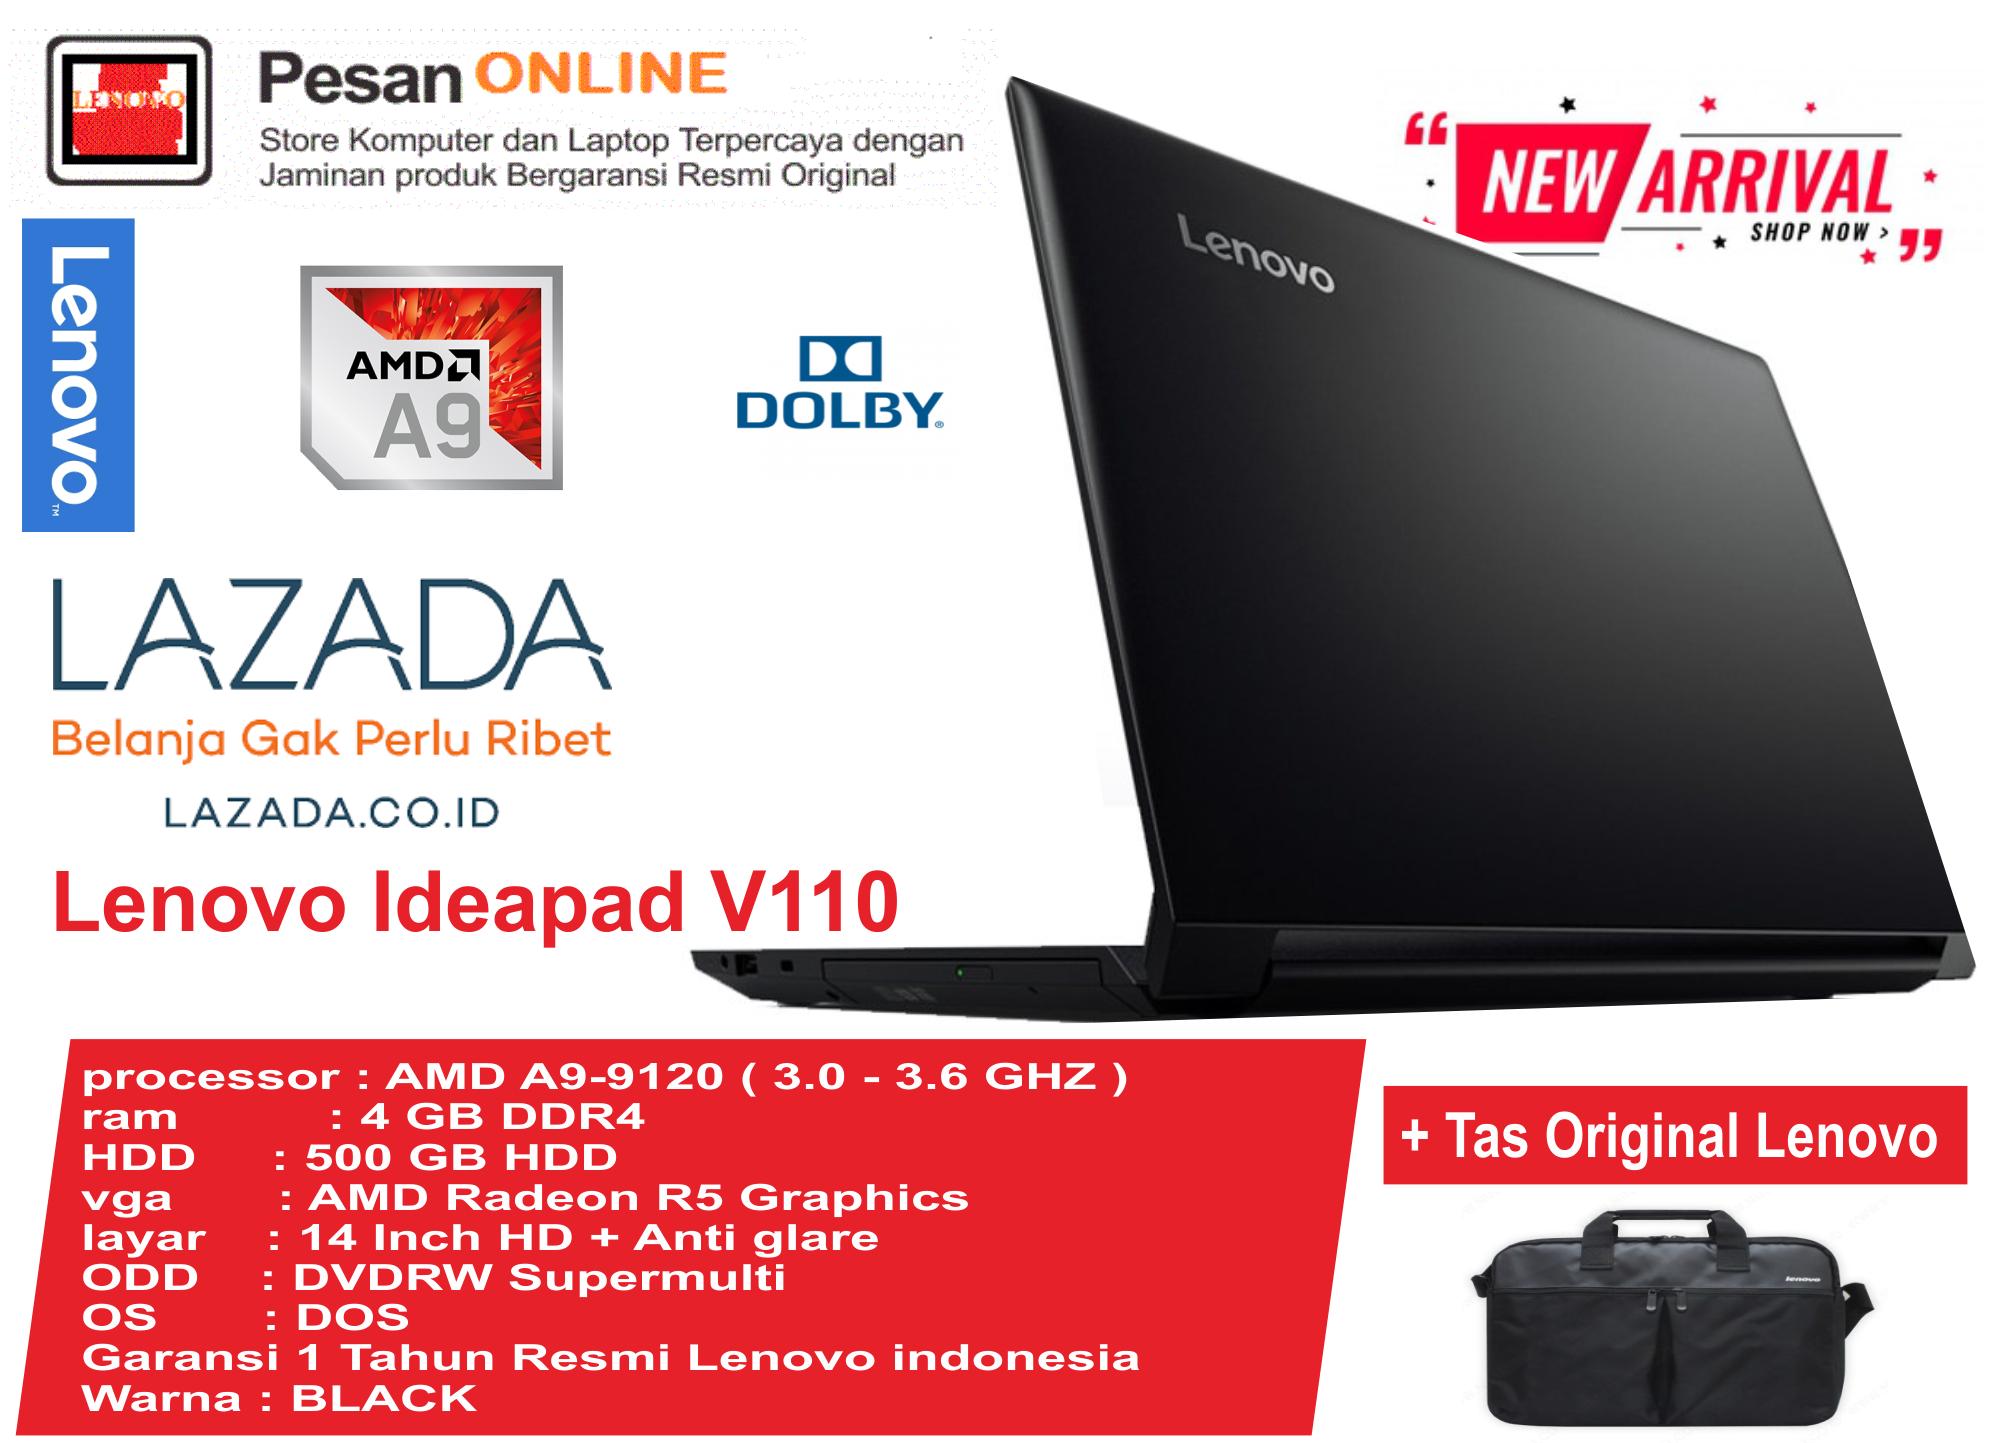 Lenovo V110 - 14AST AMD A9 -9420 DOS RAM 4GB DDR4/ HDD 500 GB/ 14 inch HD+Anti Glare / Radeon R5 Share Graphics/ Garansi Resmi Lenovo Indonesia